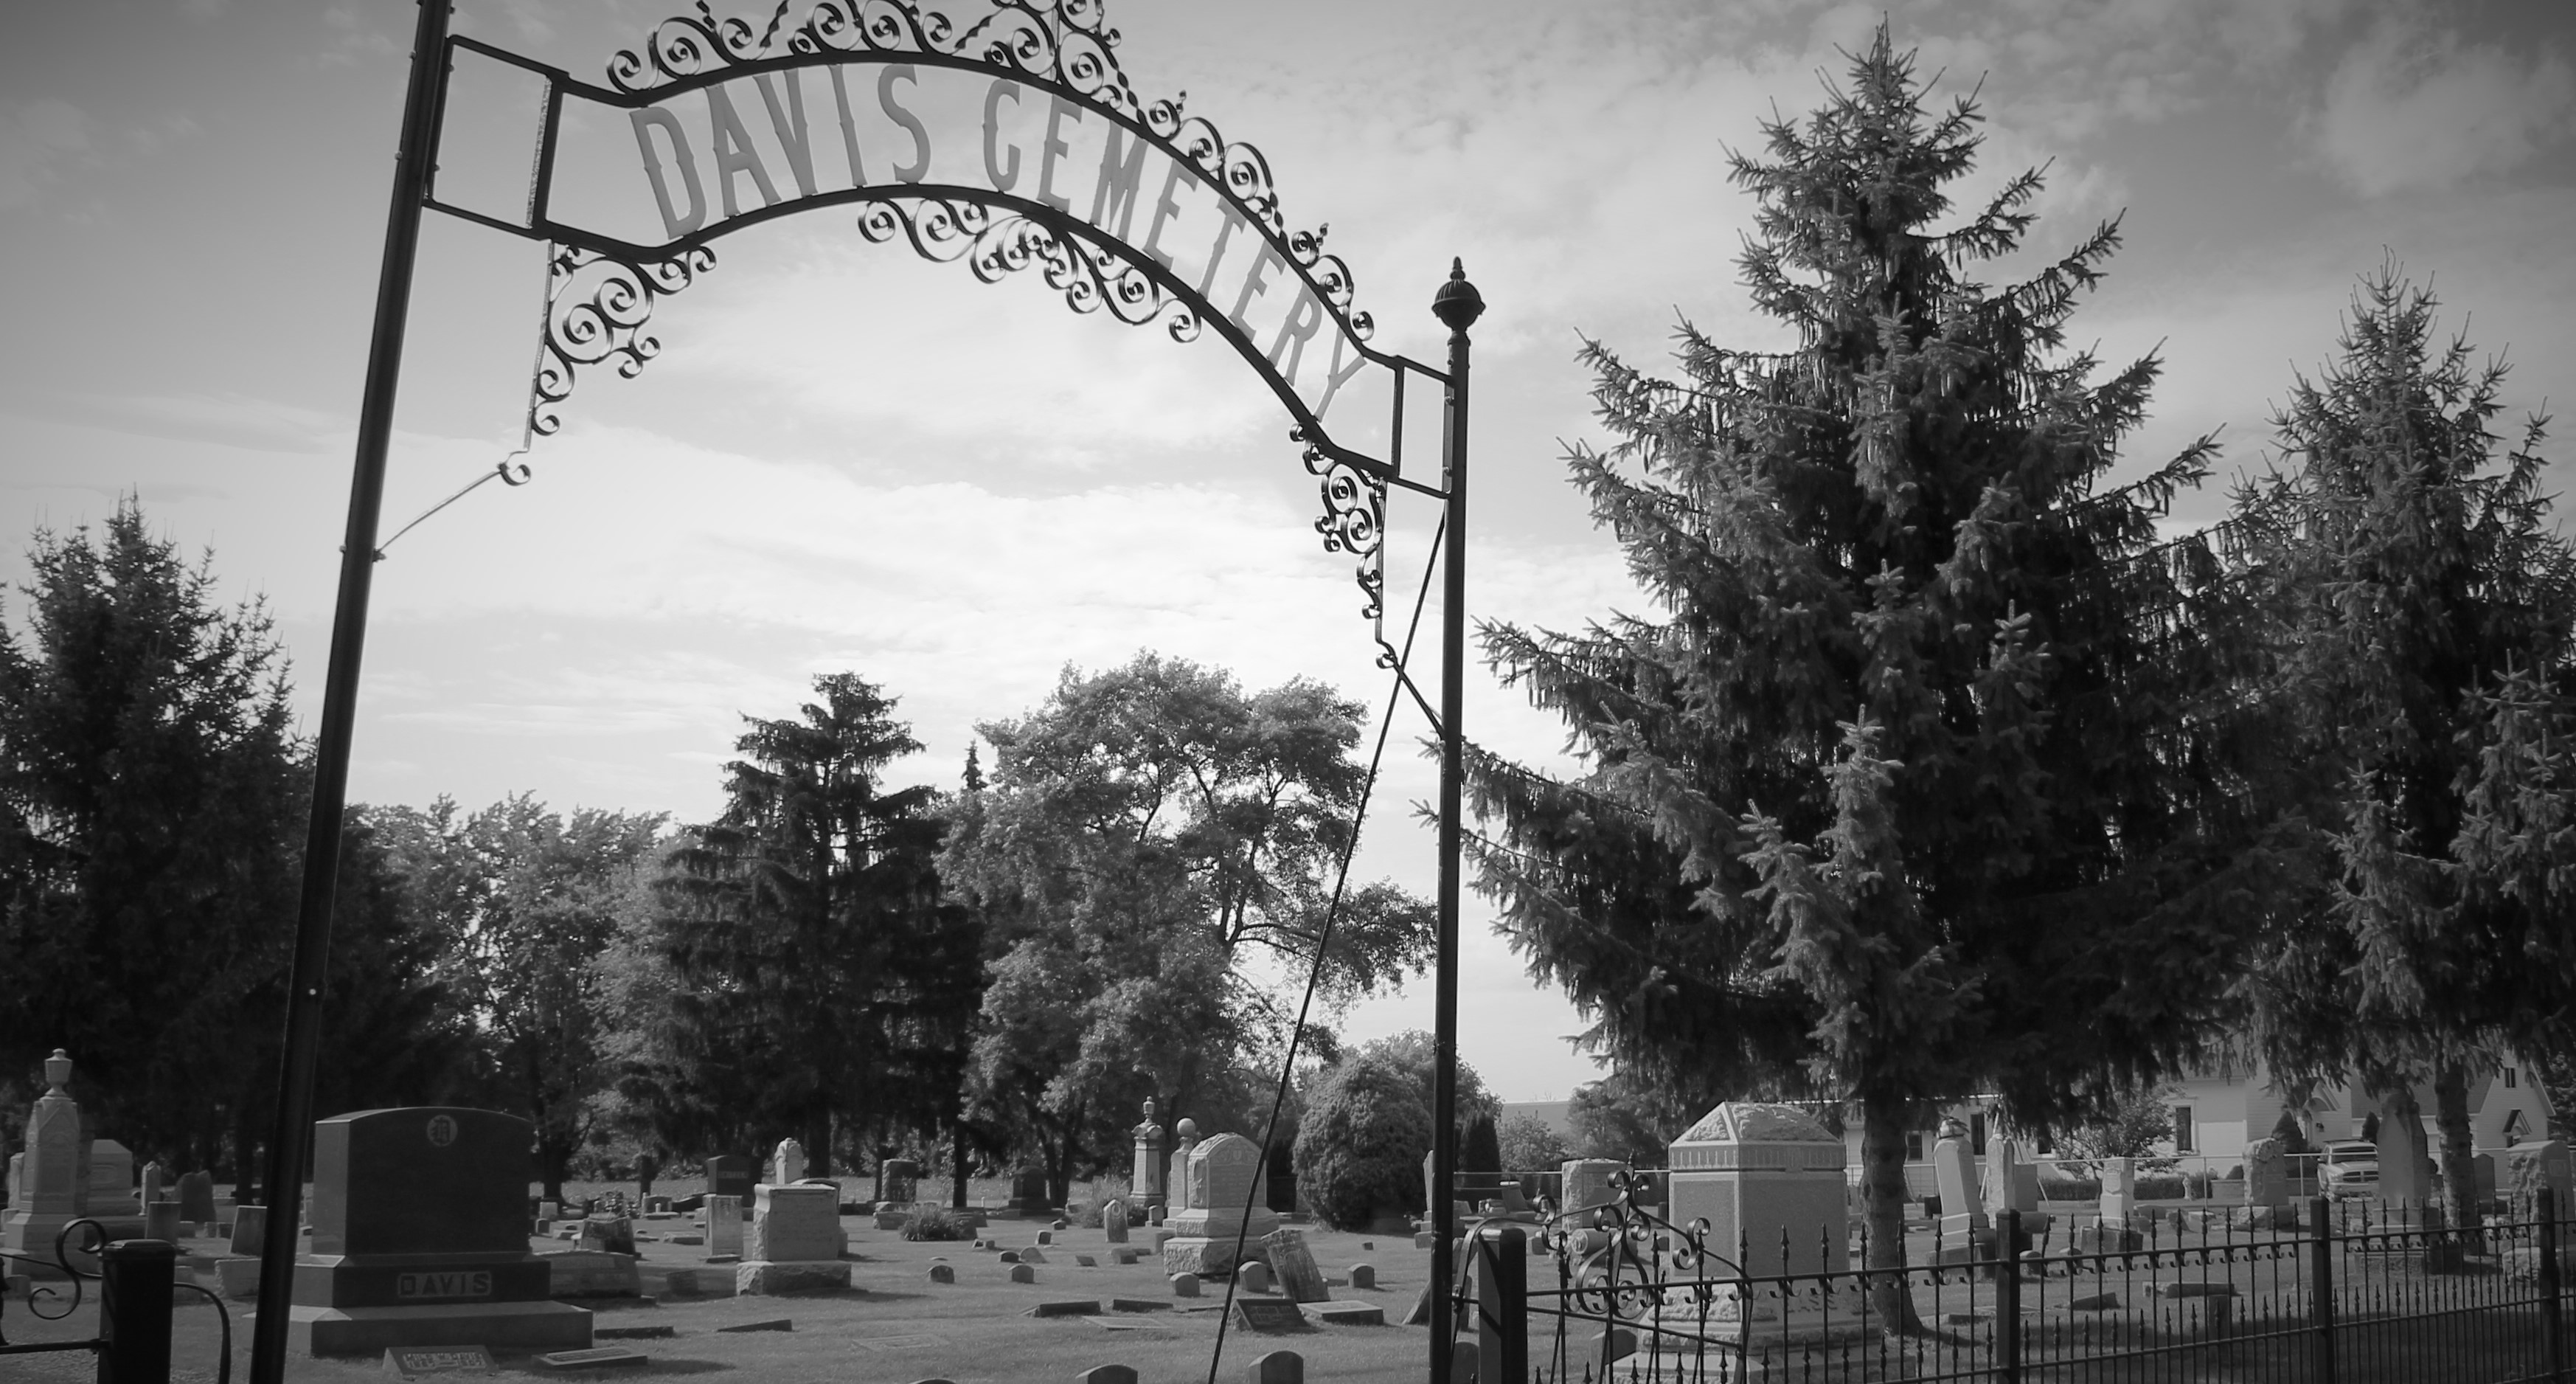 Davis Cemetery copy.jpg